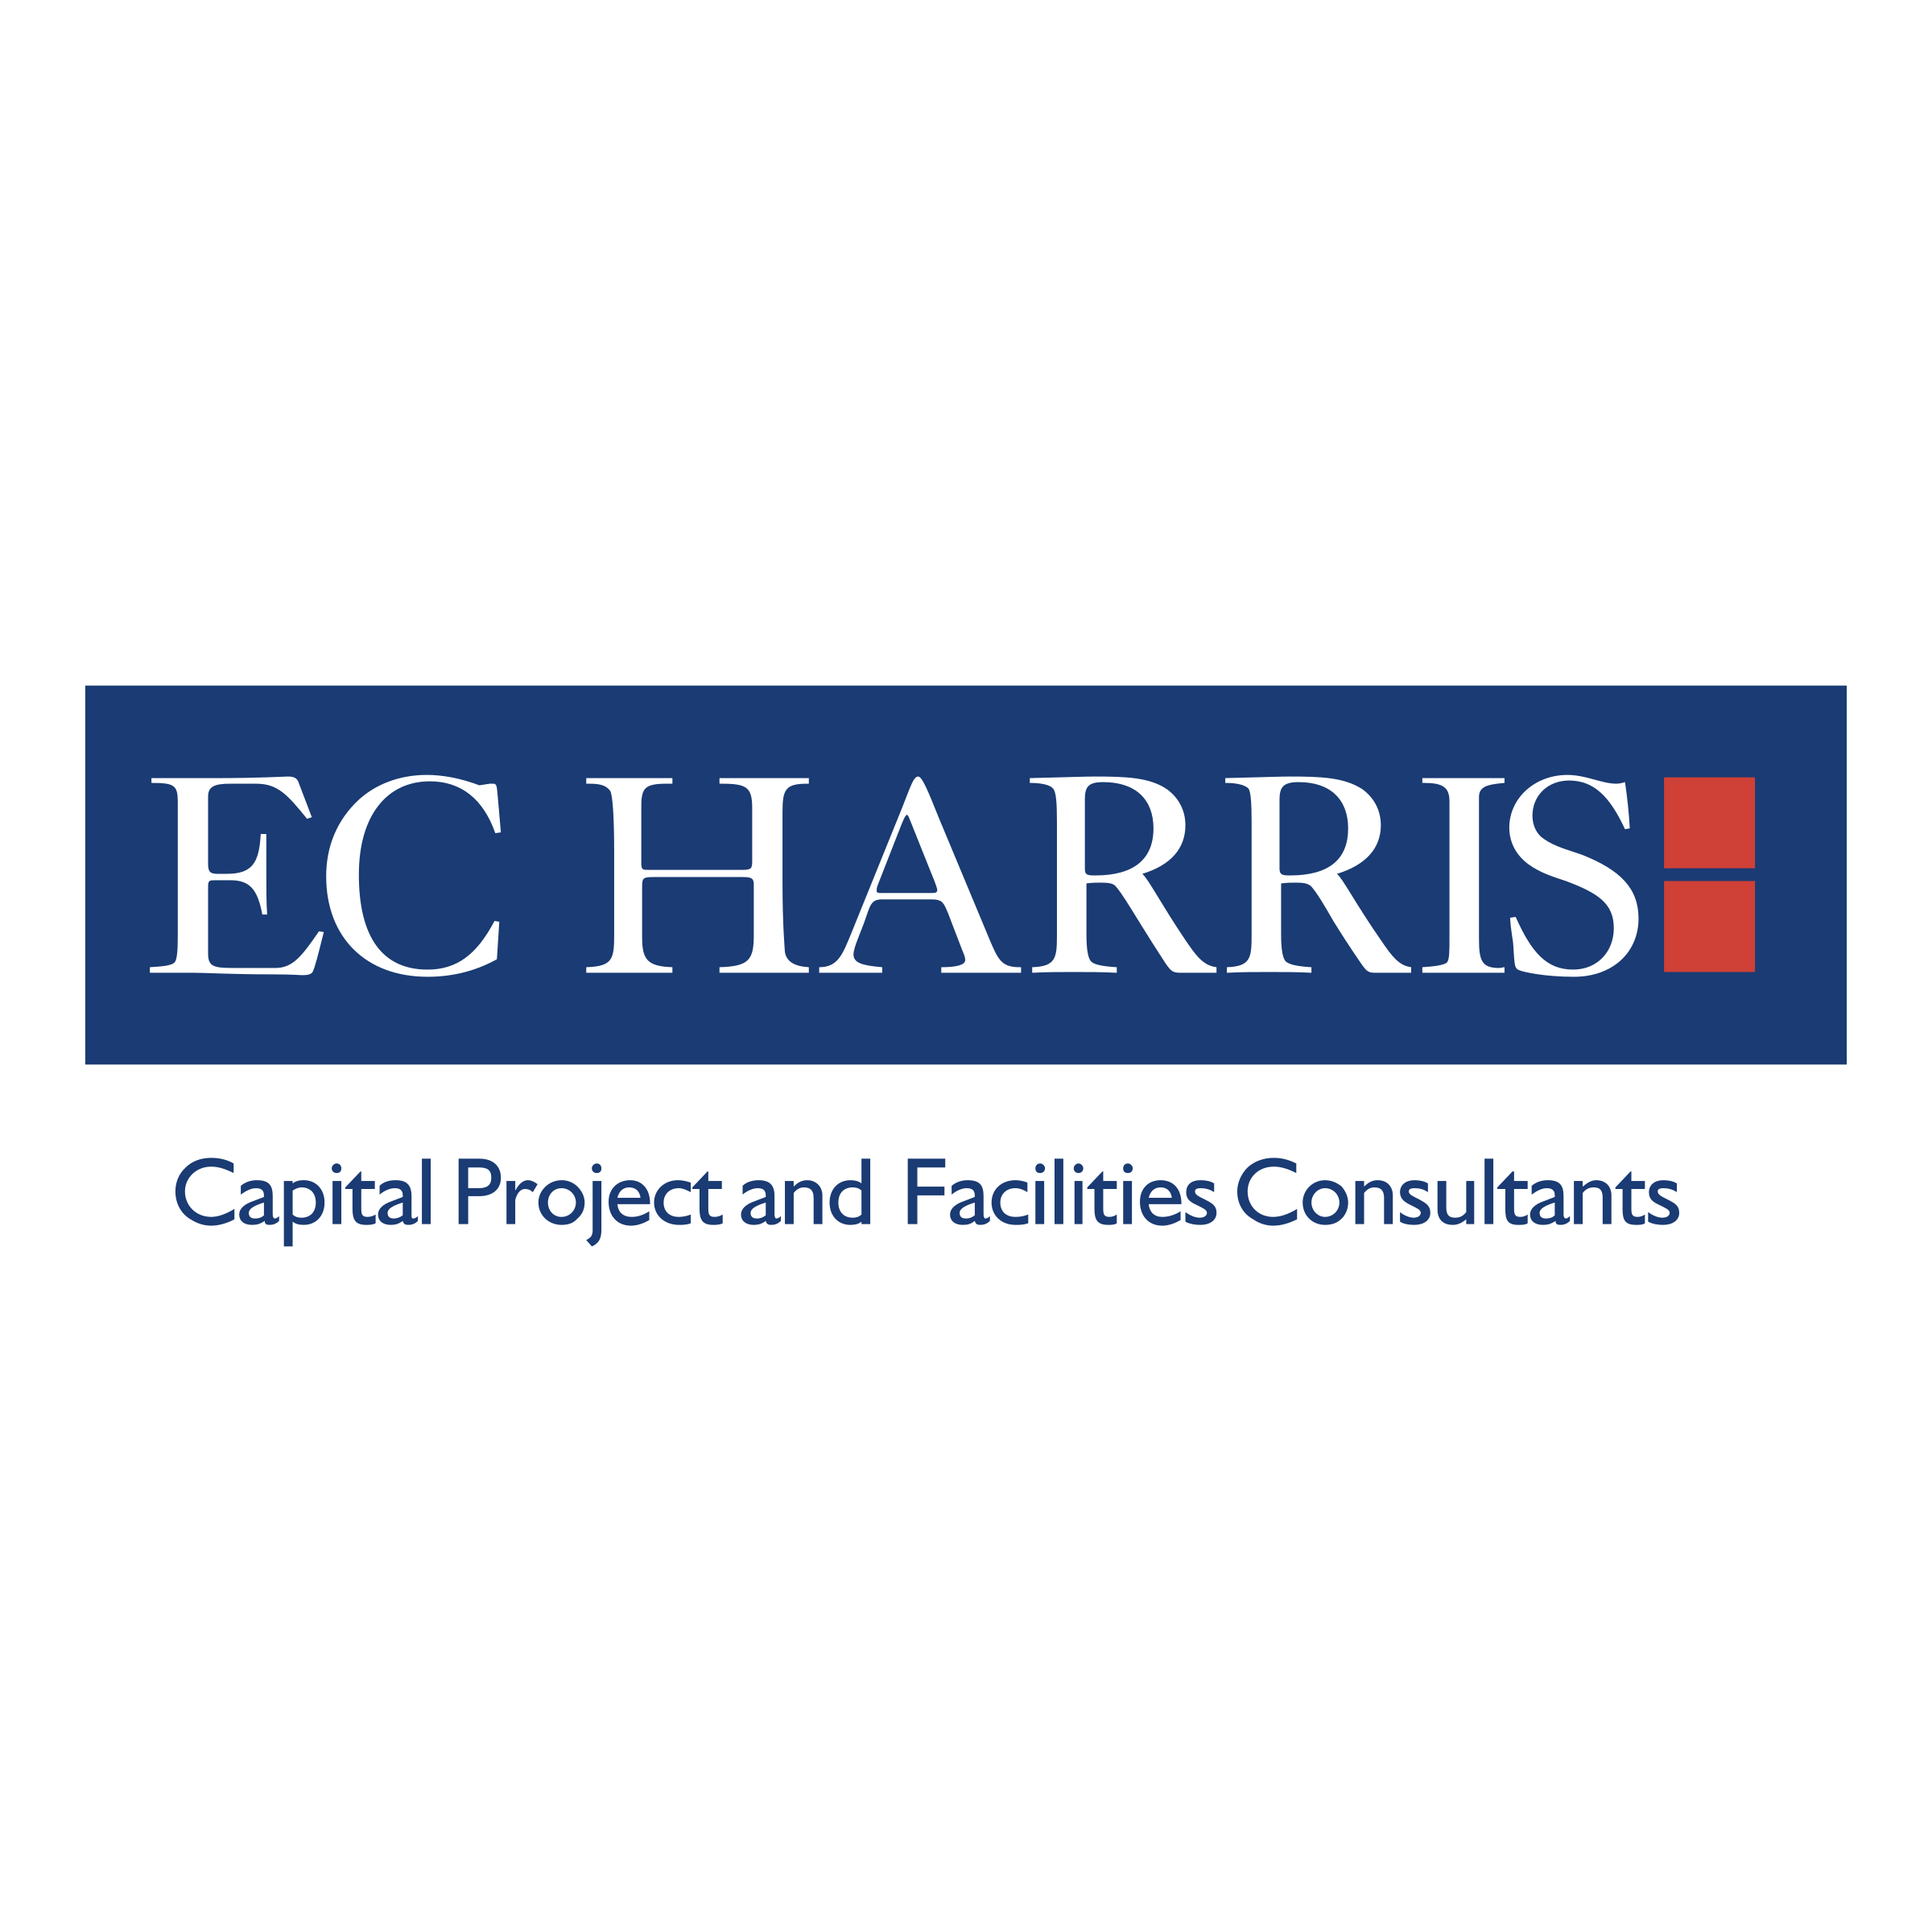 Harris Logo - EC Harris Logo PNG Transparent & SVG Vector - Freebie Supply